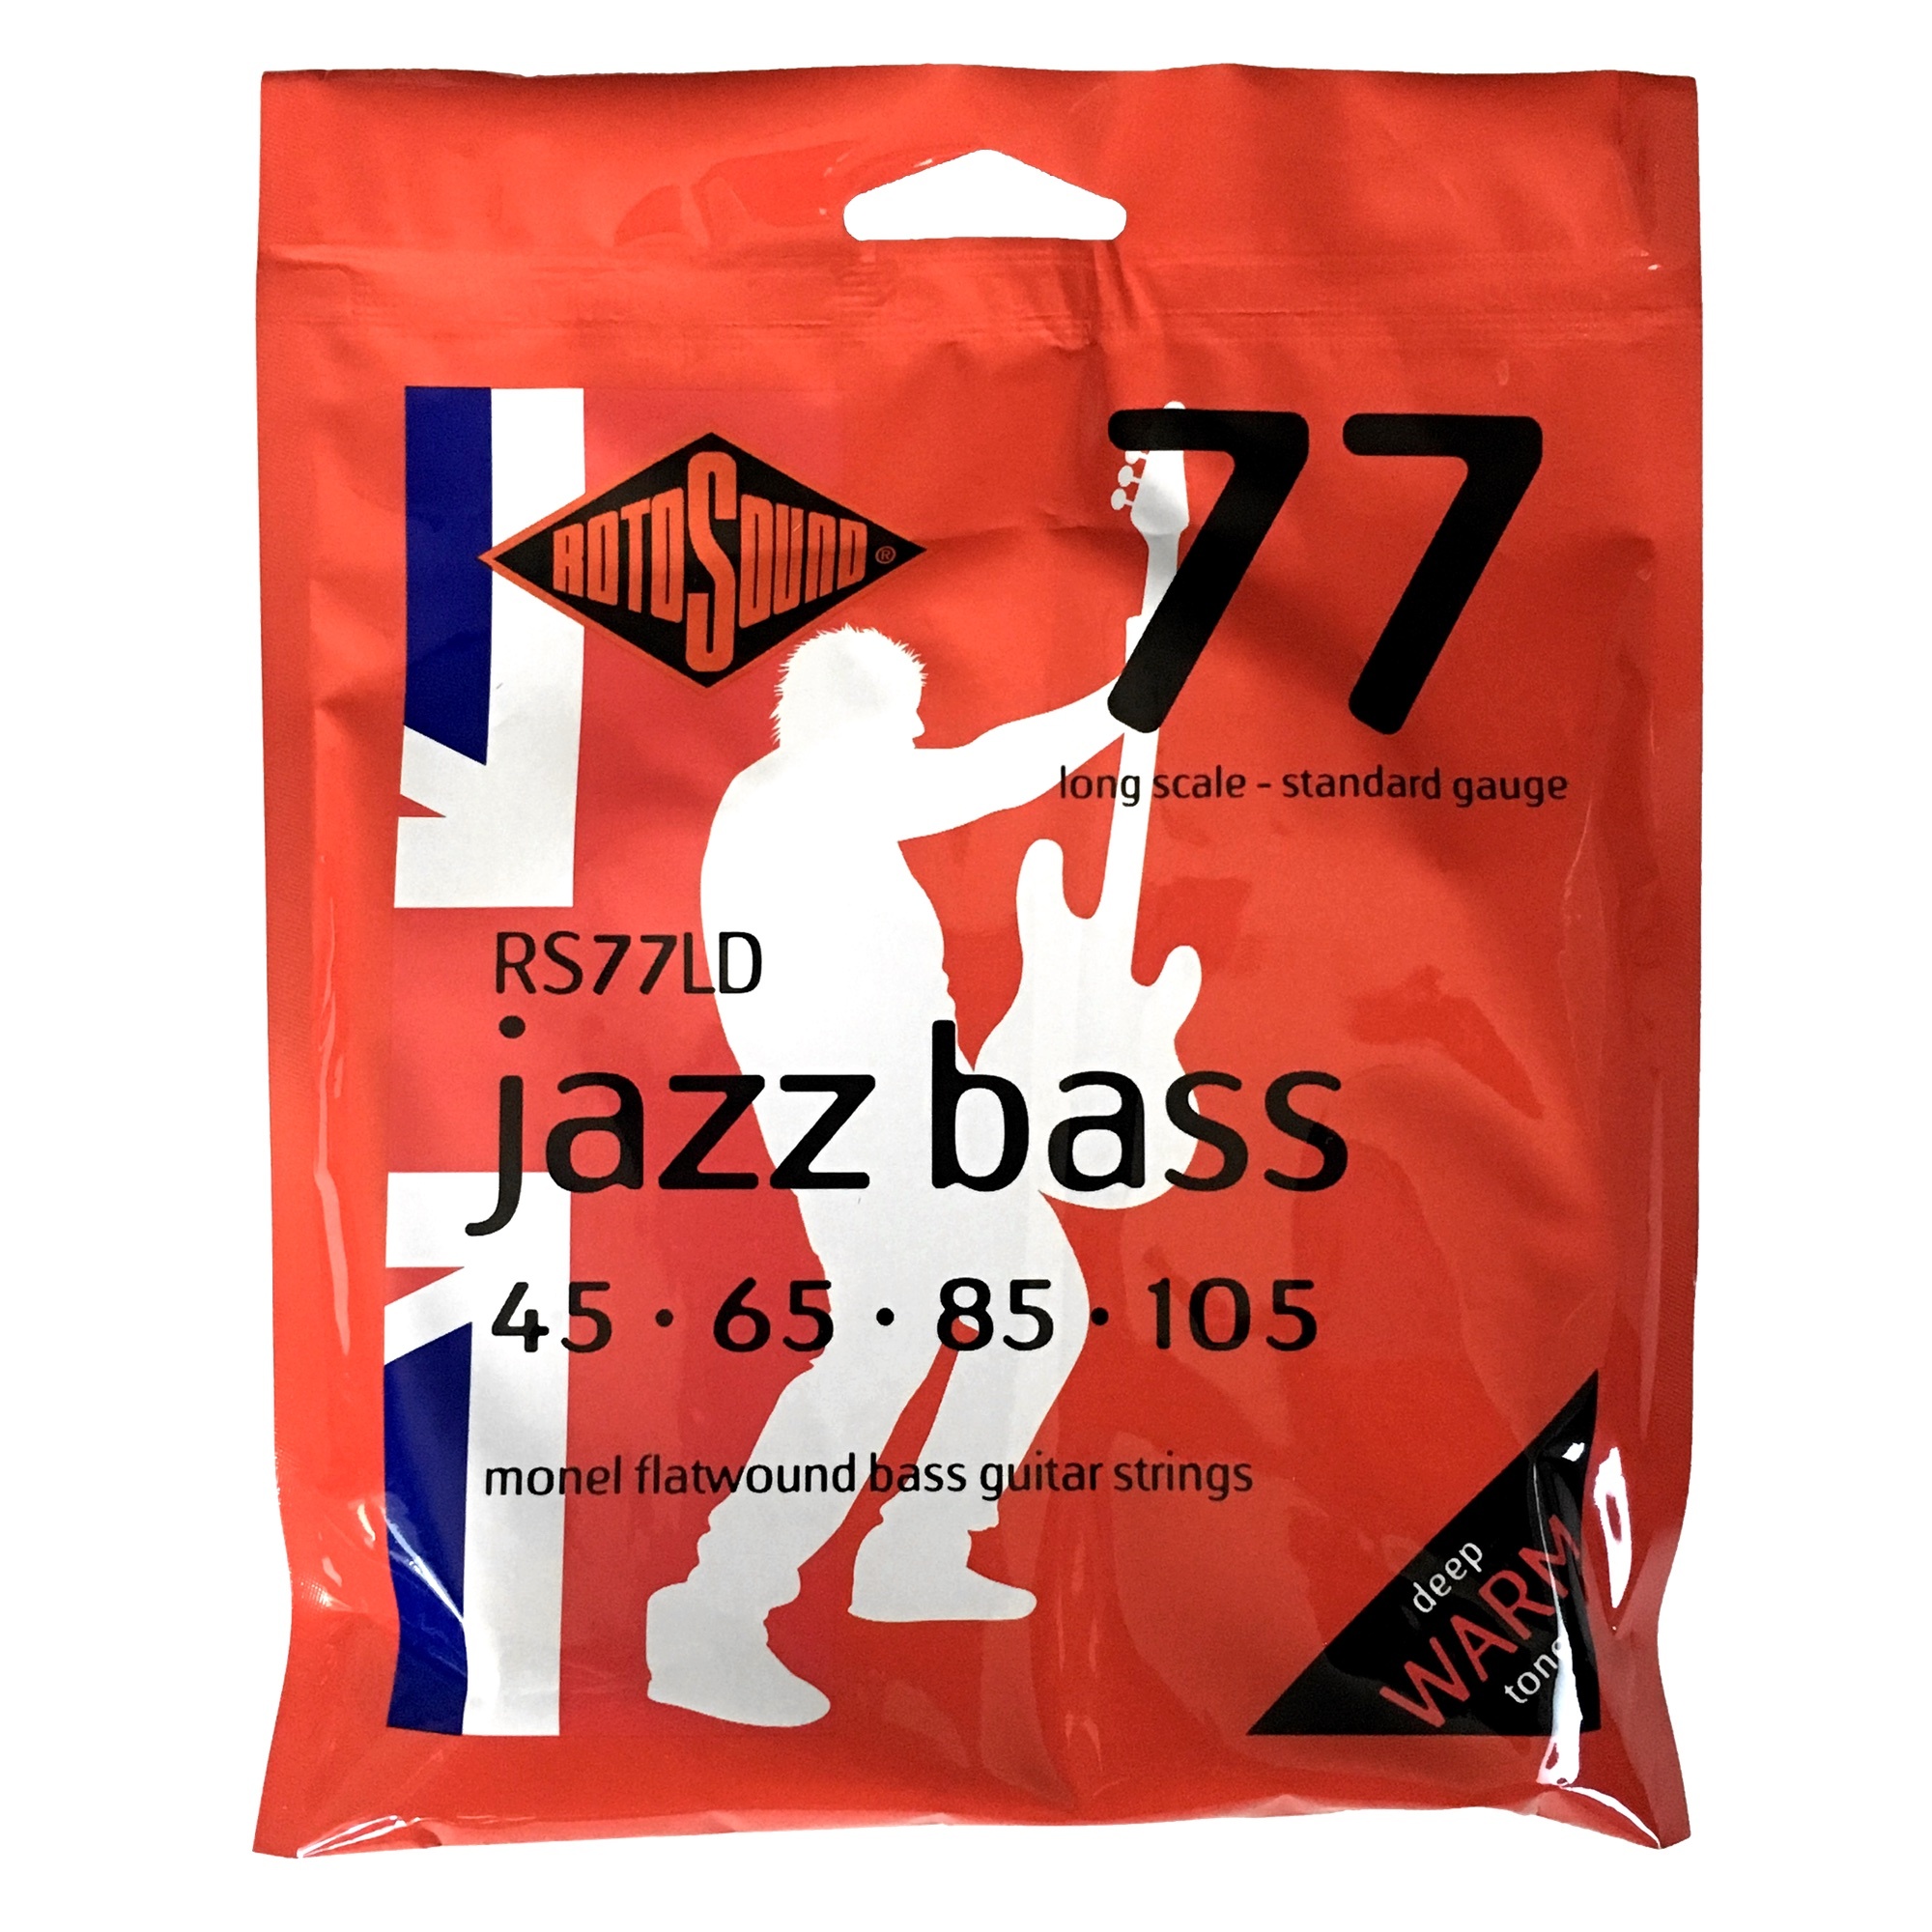 Rotosound RS77LD Jazz Bass 77 Monel Flatwound Bass Guitar Strings (45-105)